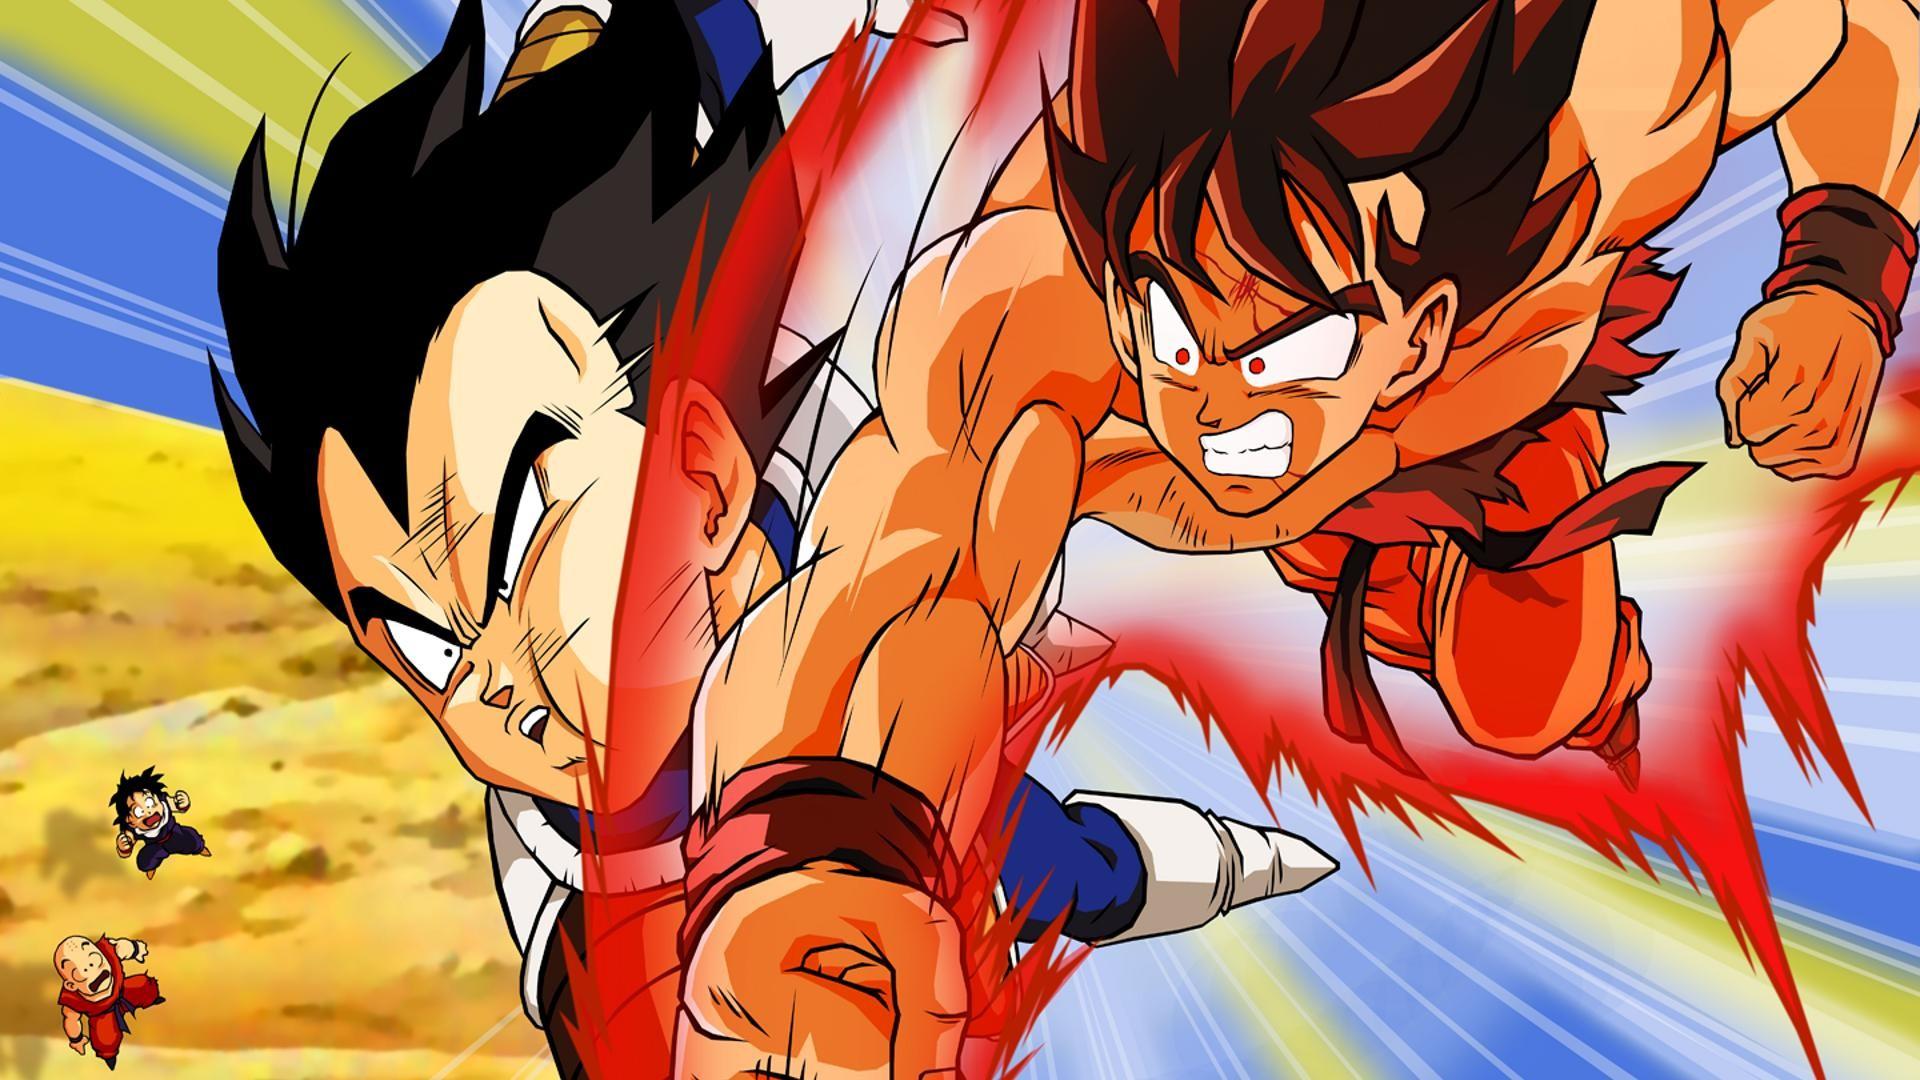 Goku VS Vegeta Fighting Wallpaper, Goku VS Vegeta Fighting